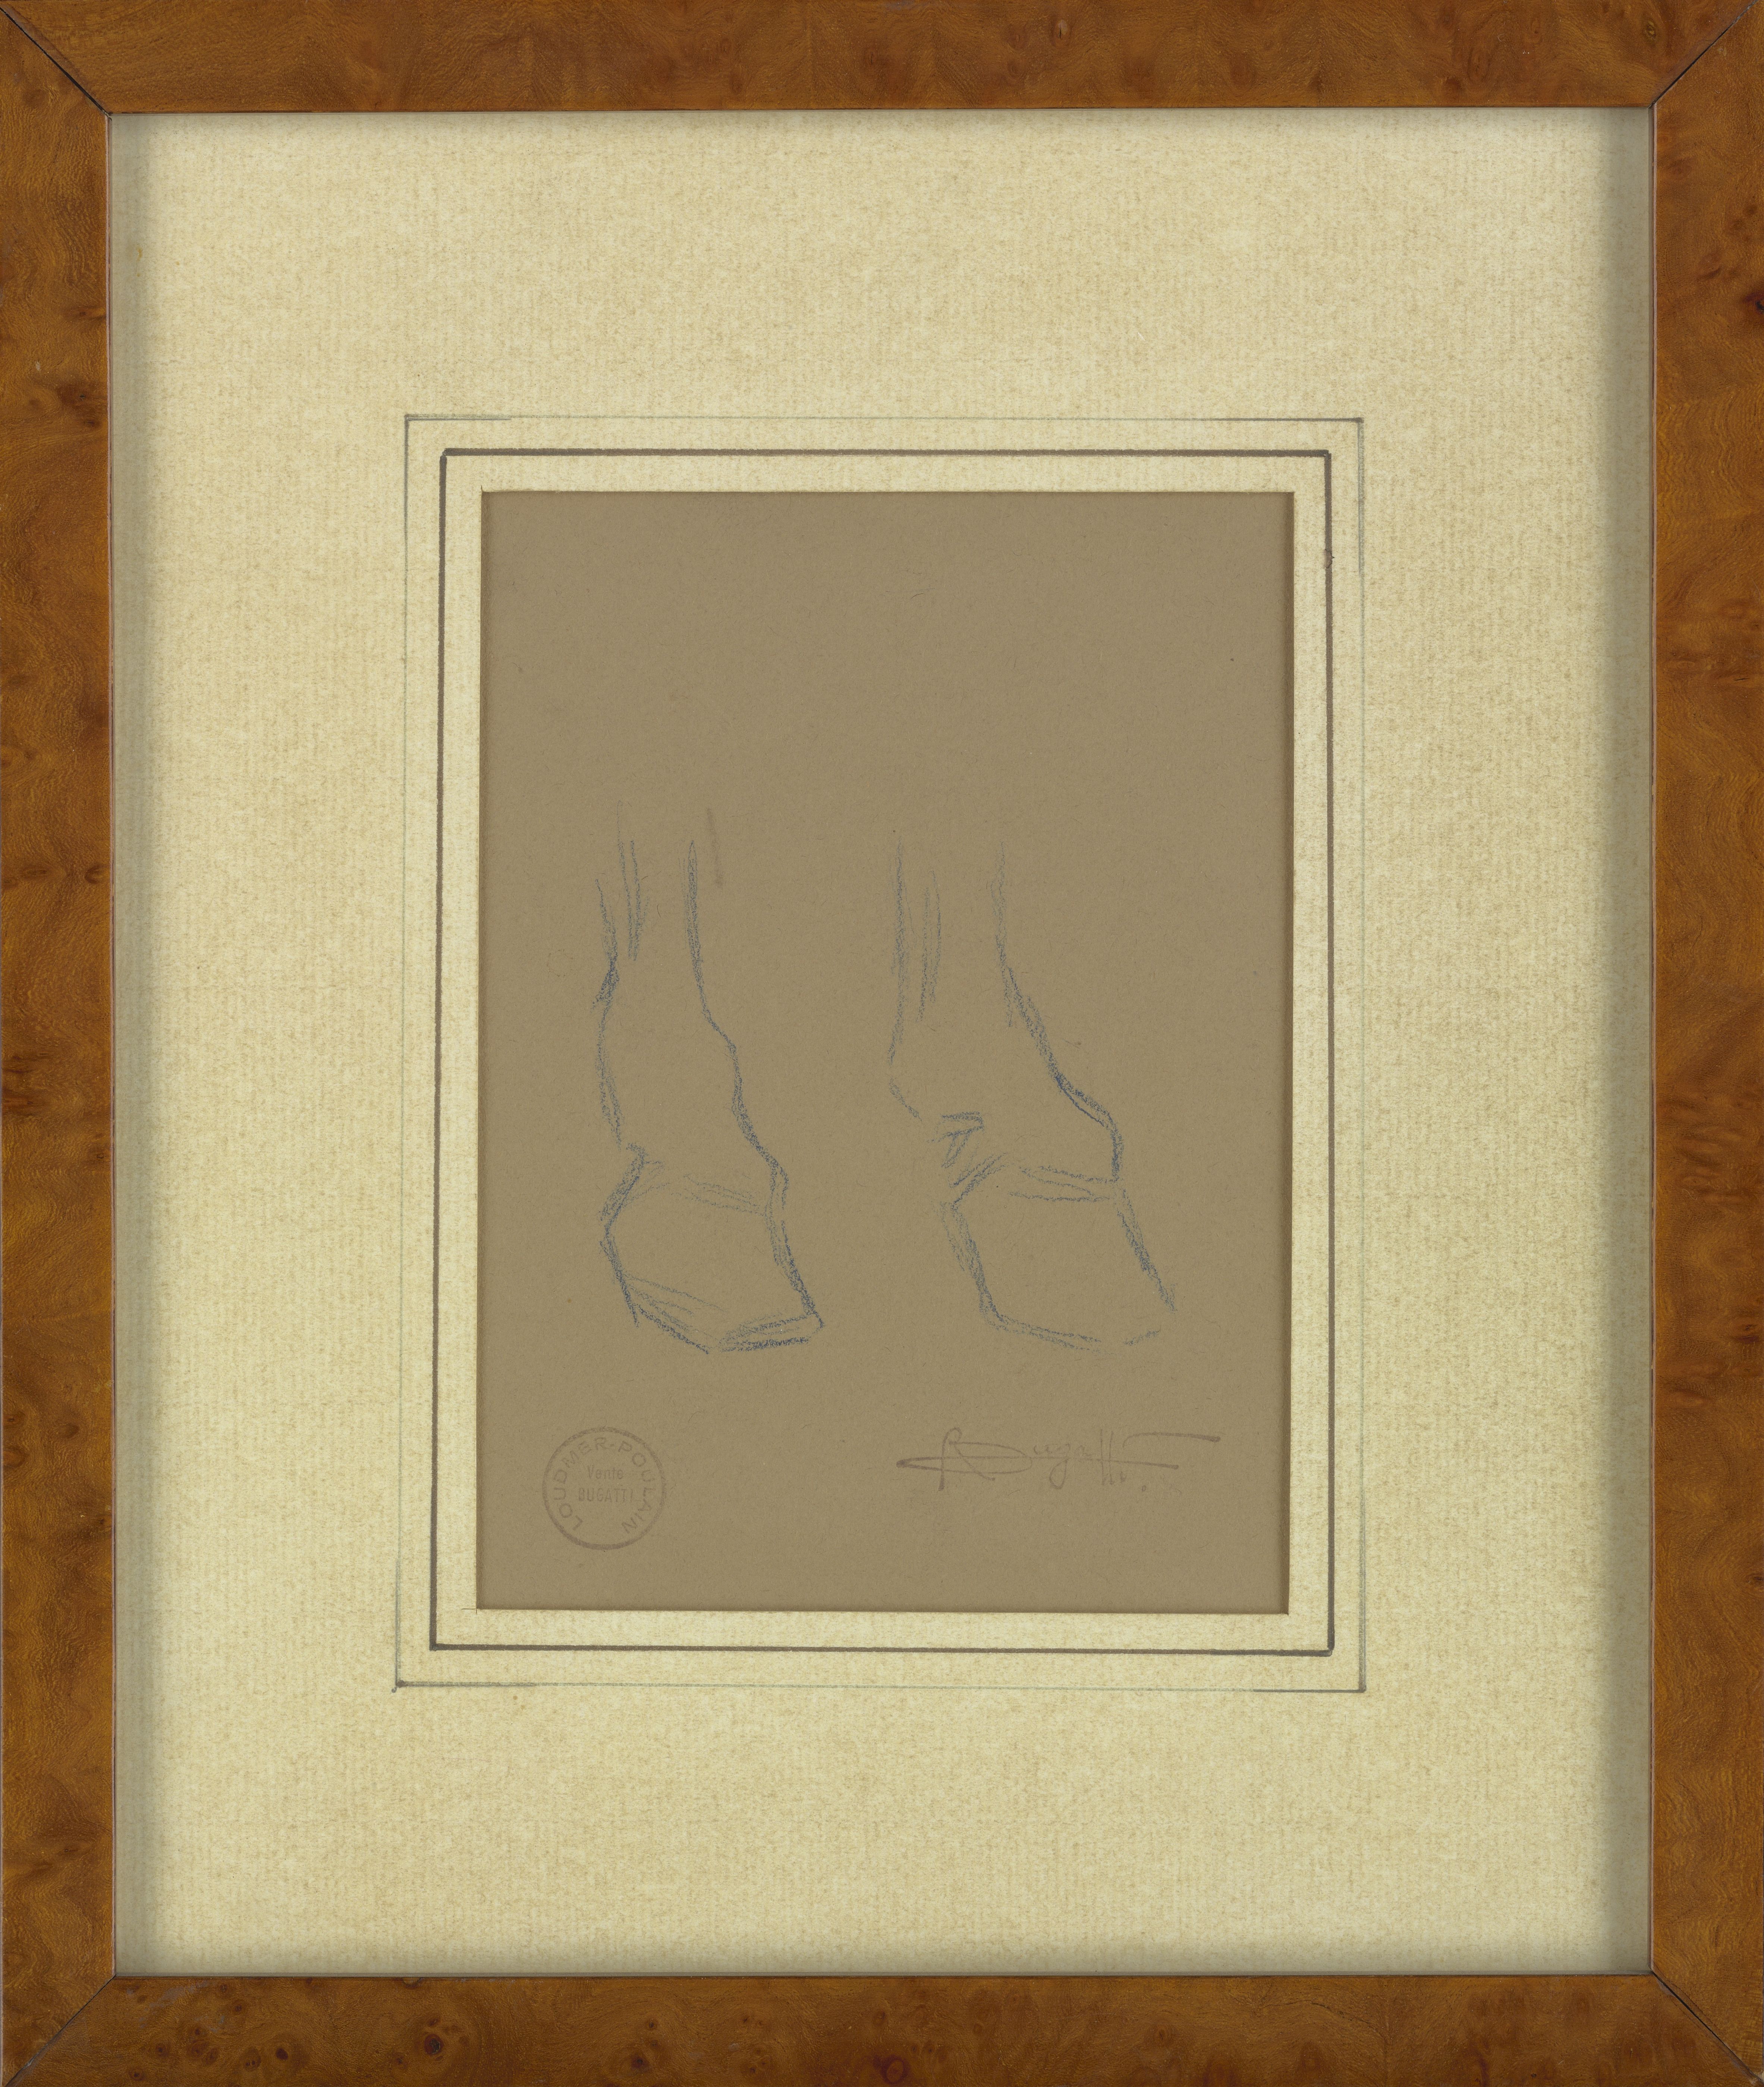 Horses hooves, drawing, c. 1900